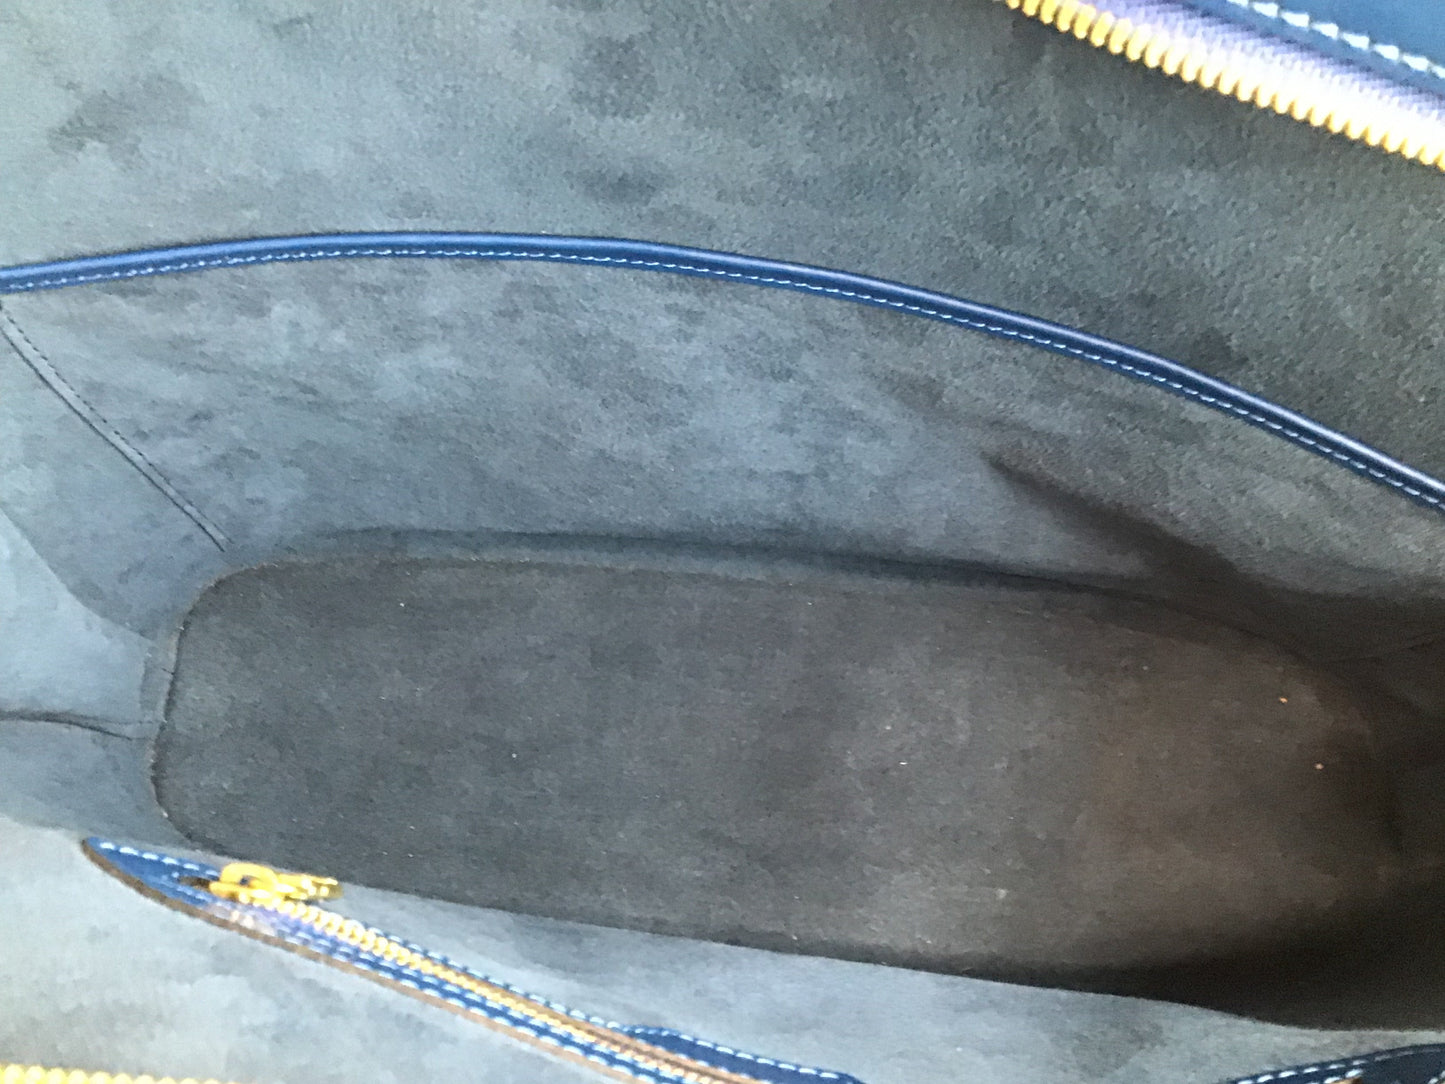 Toledo Blue Epi Leather Lussac Tote Bag By Louis Vuitton  Size: Large